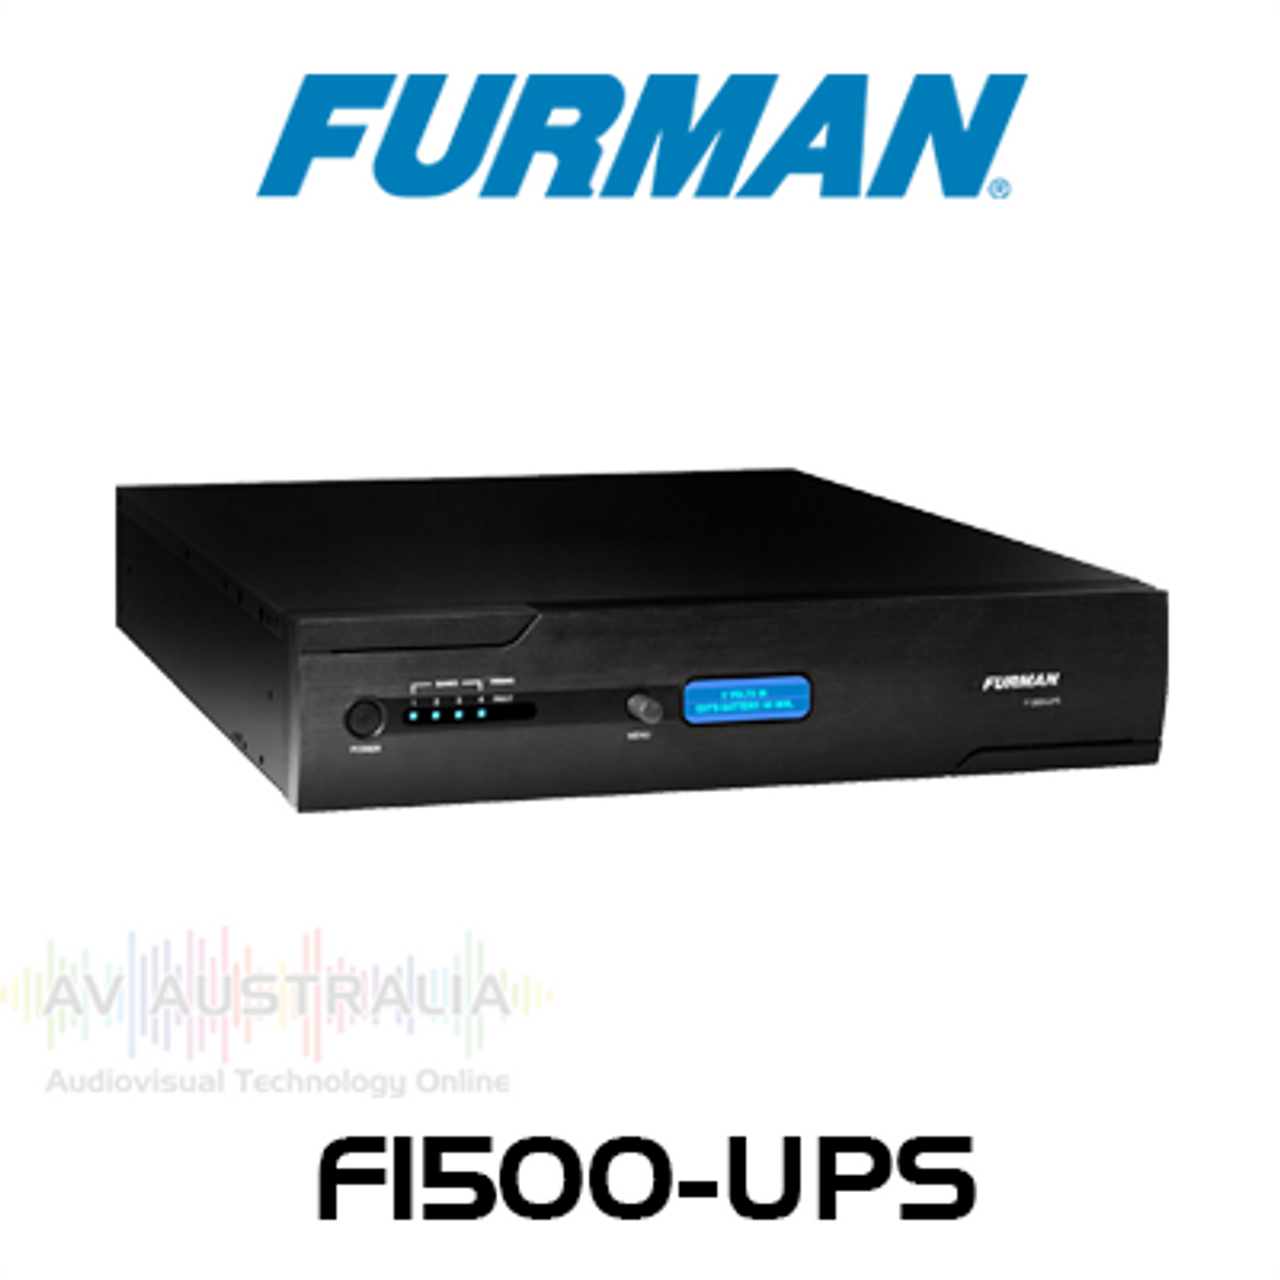 Furman F1500-UPS 1500VA 2RU UPS & Voltage Regulator